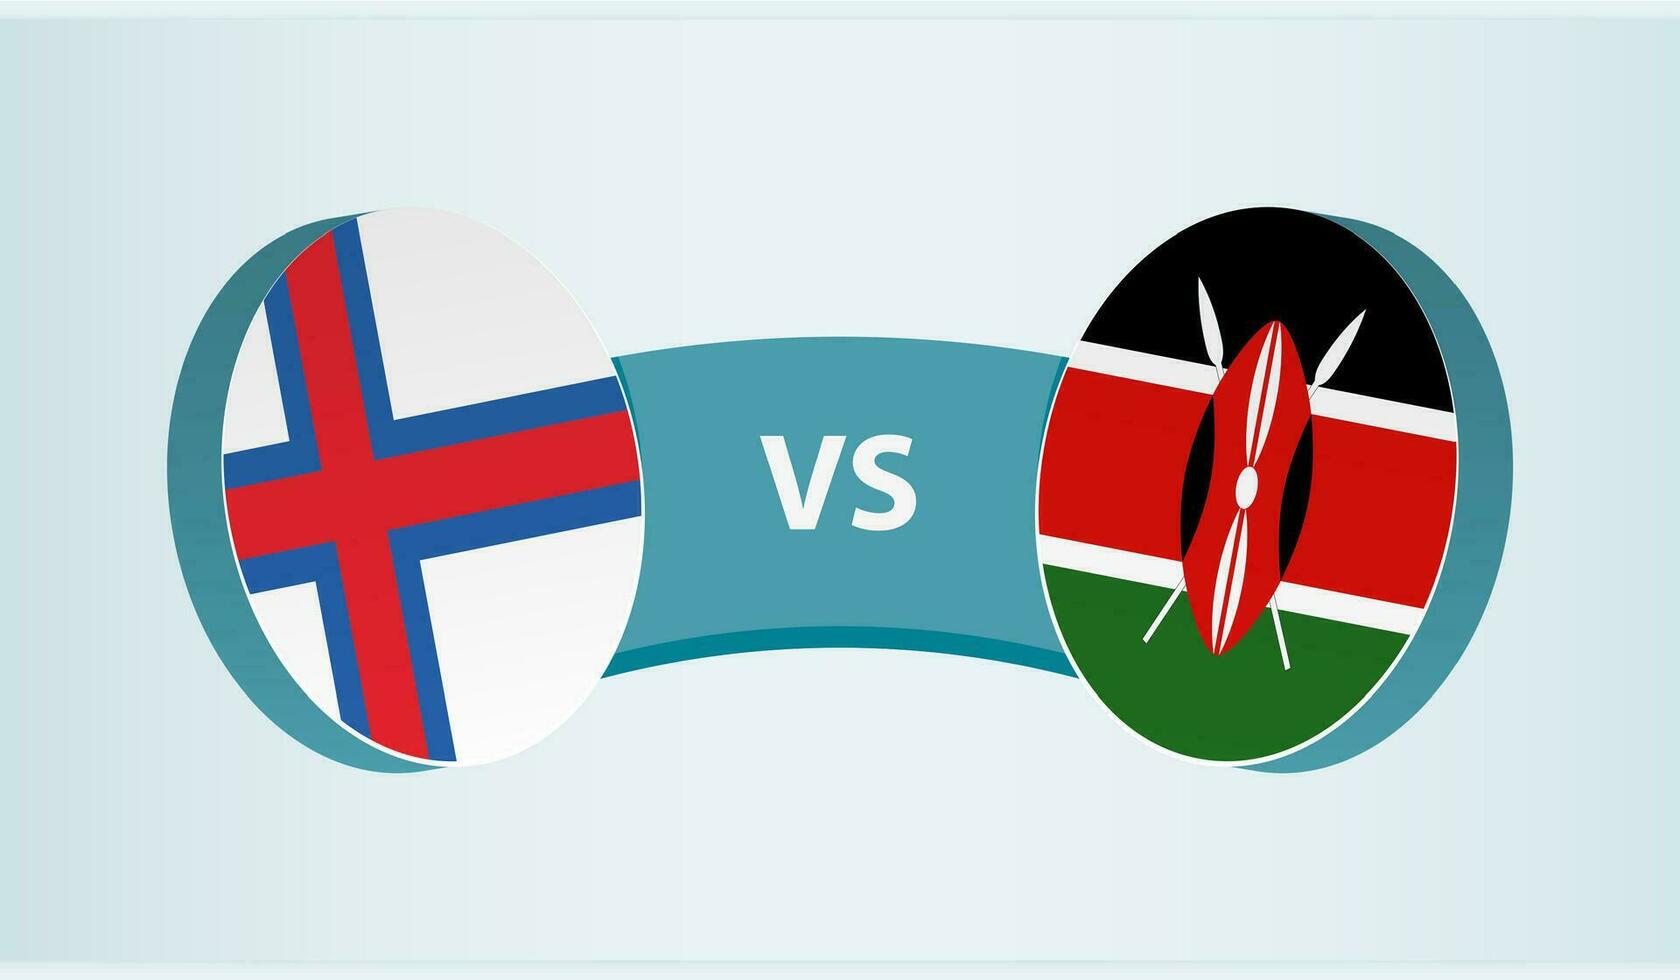 Faroe Islands versus Kenya, team sports competition concept. vector